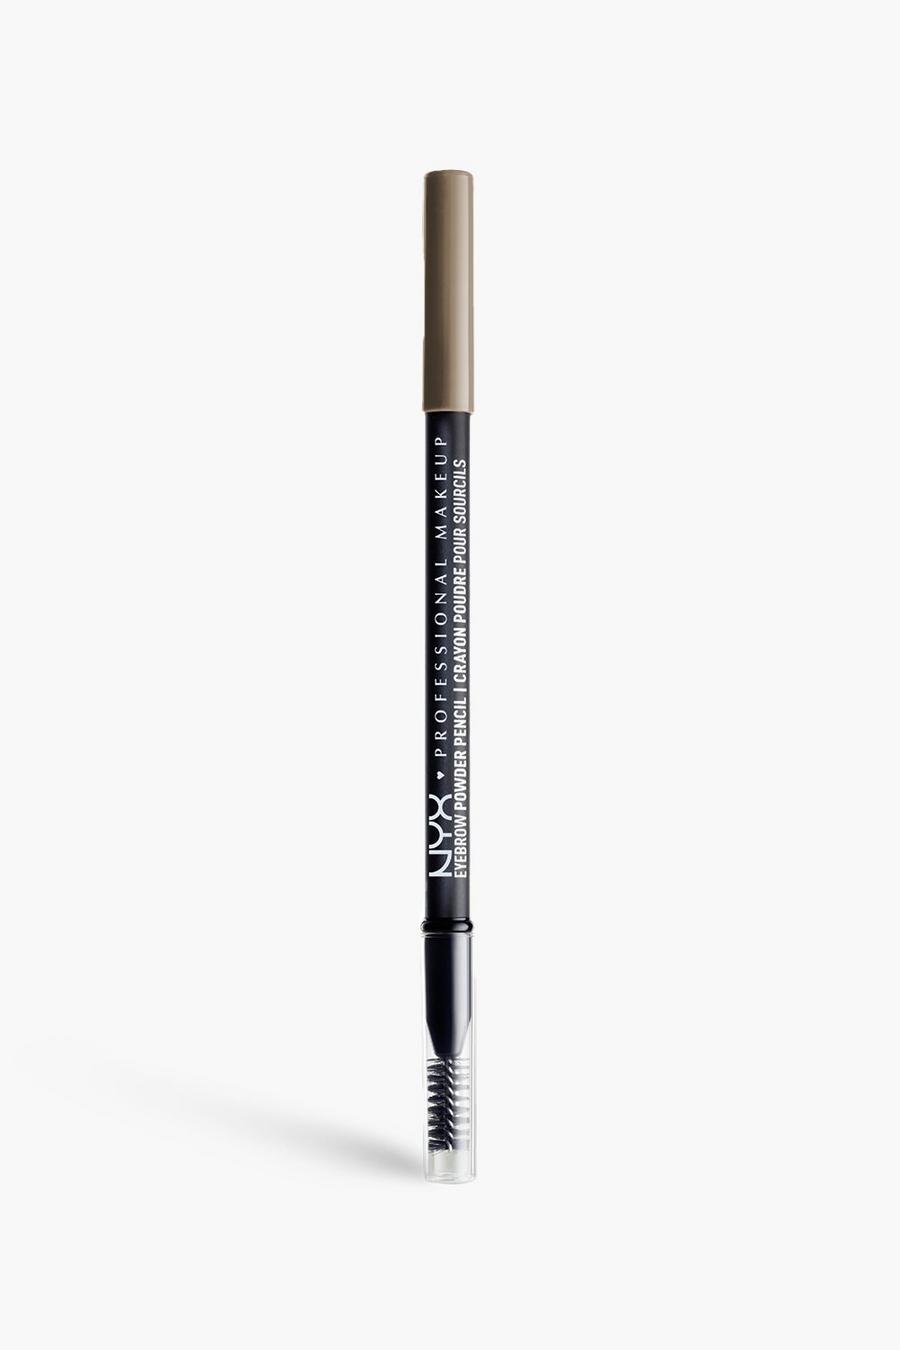 NYX Professional Makeup Augenbrauen Puder-Stift, 03 soft brown